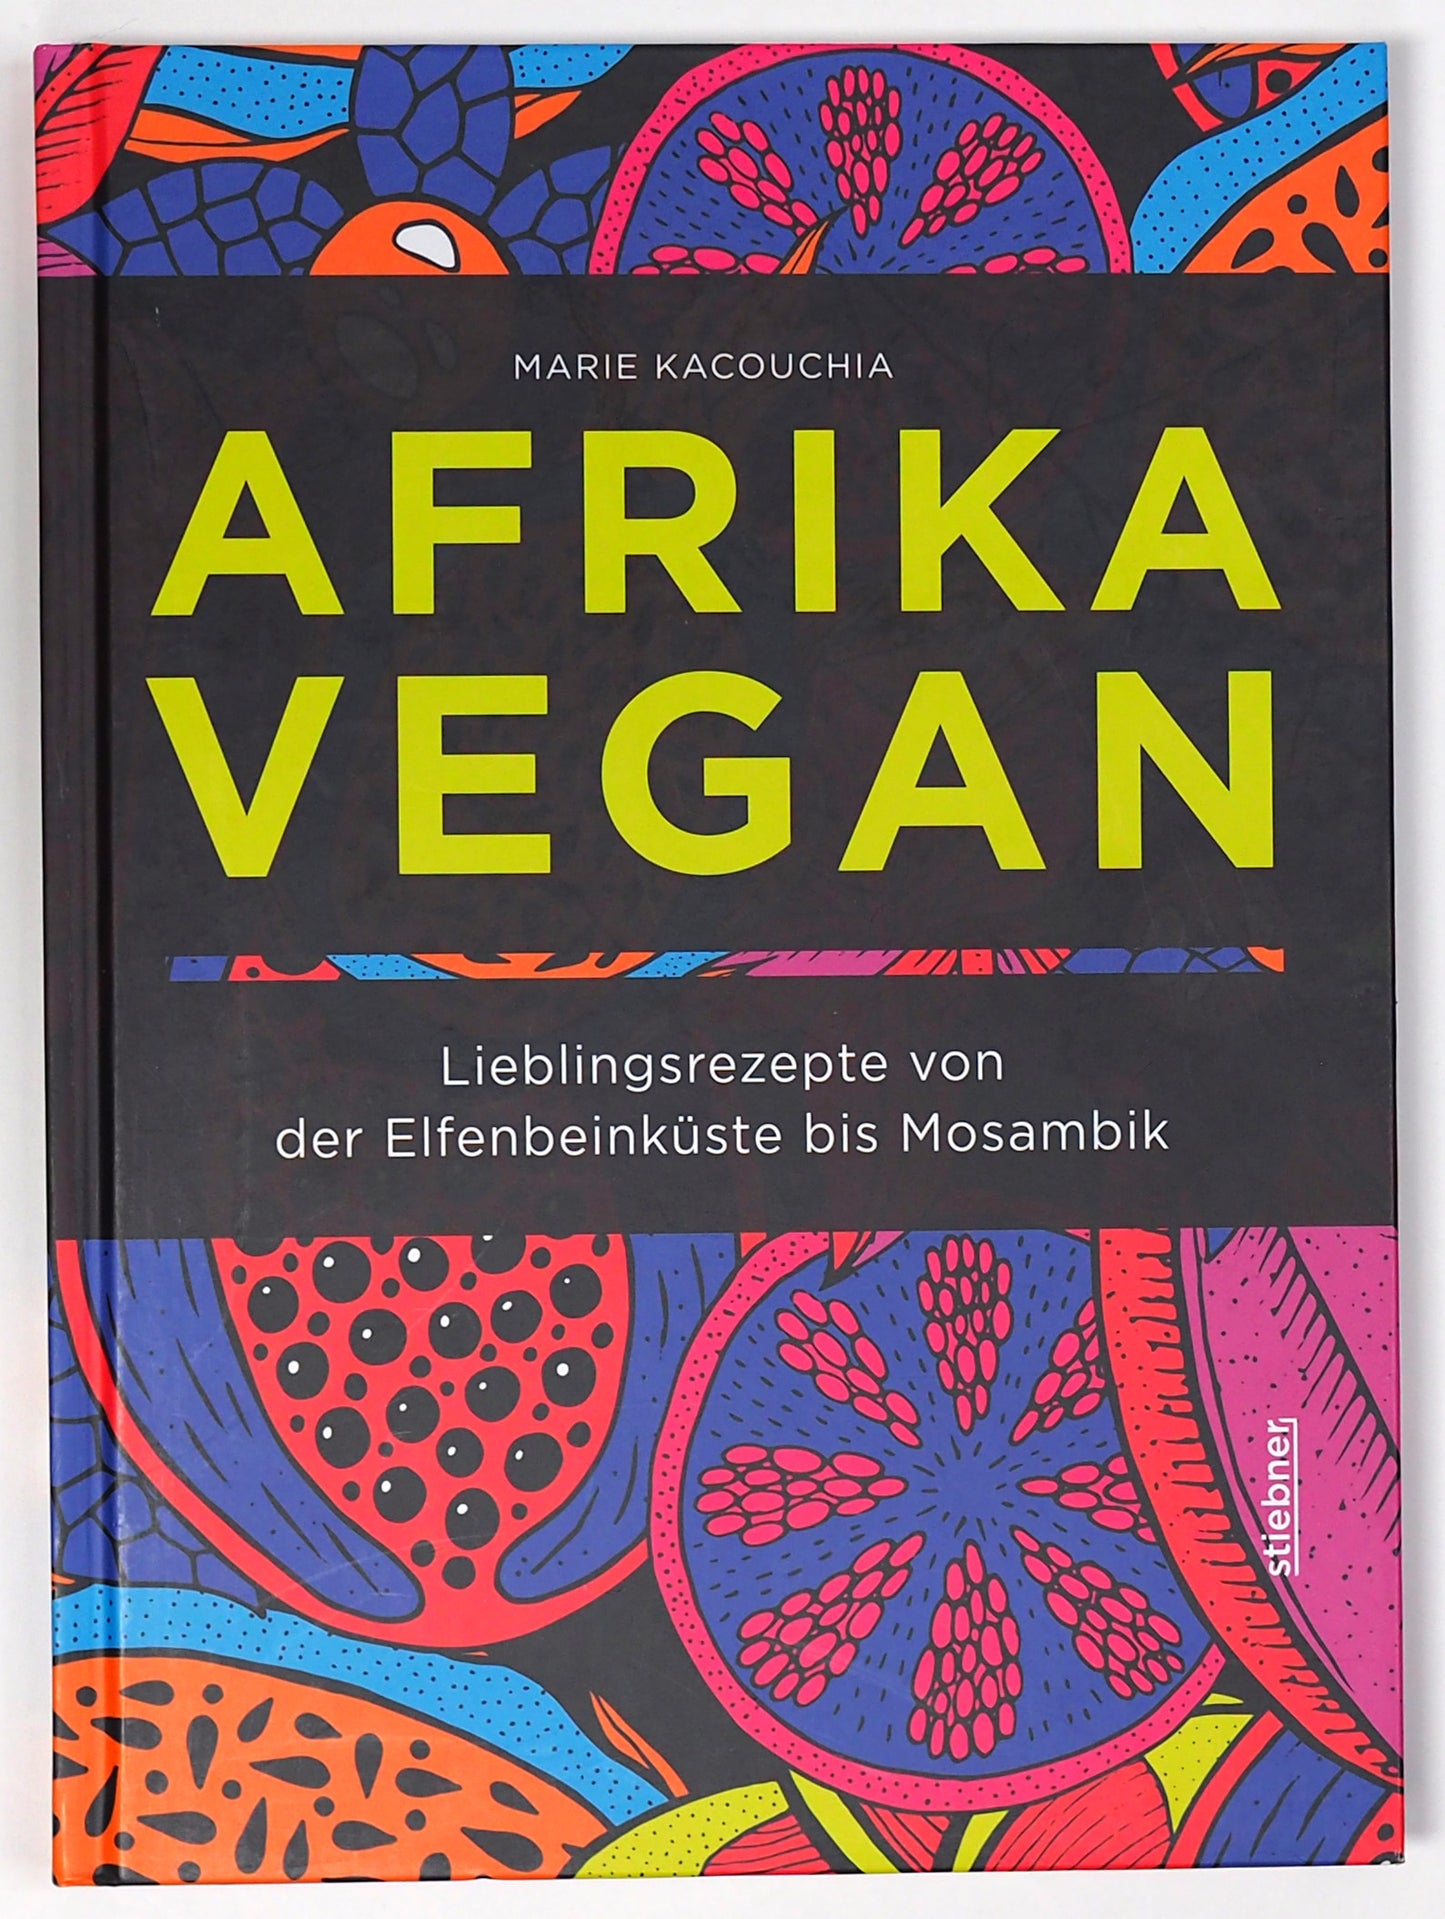 AFRIKA VEGAN by Marie Kacouchia - German Edition -